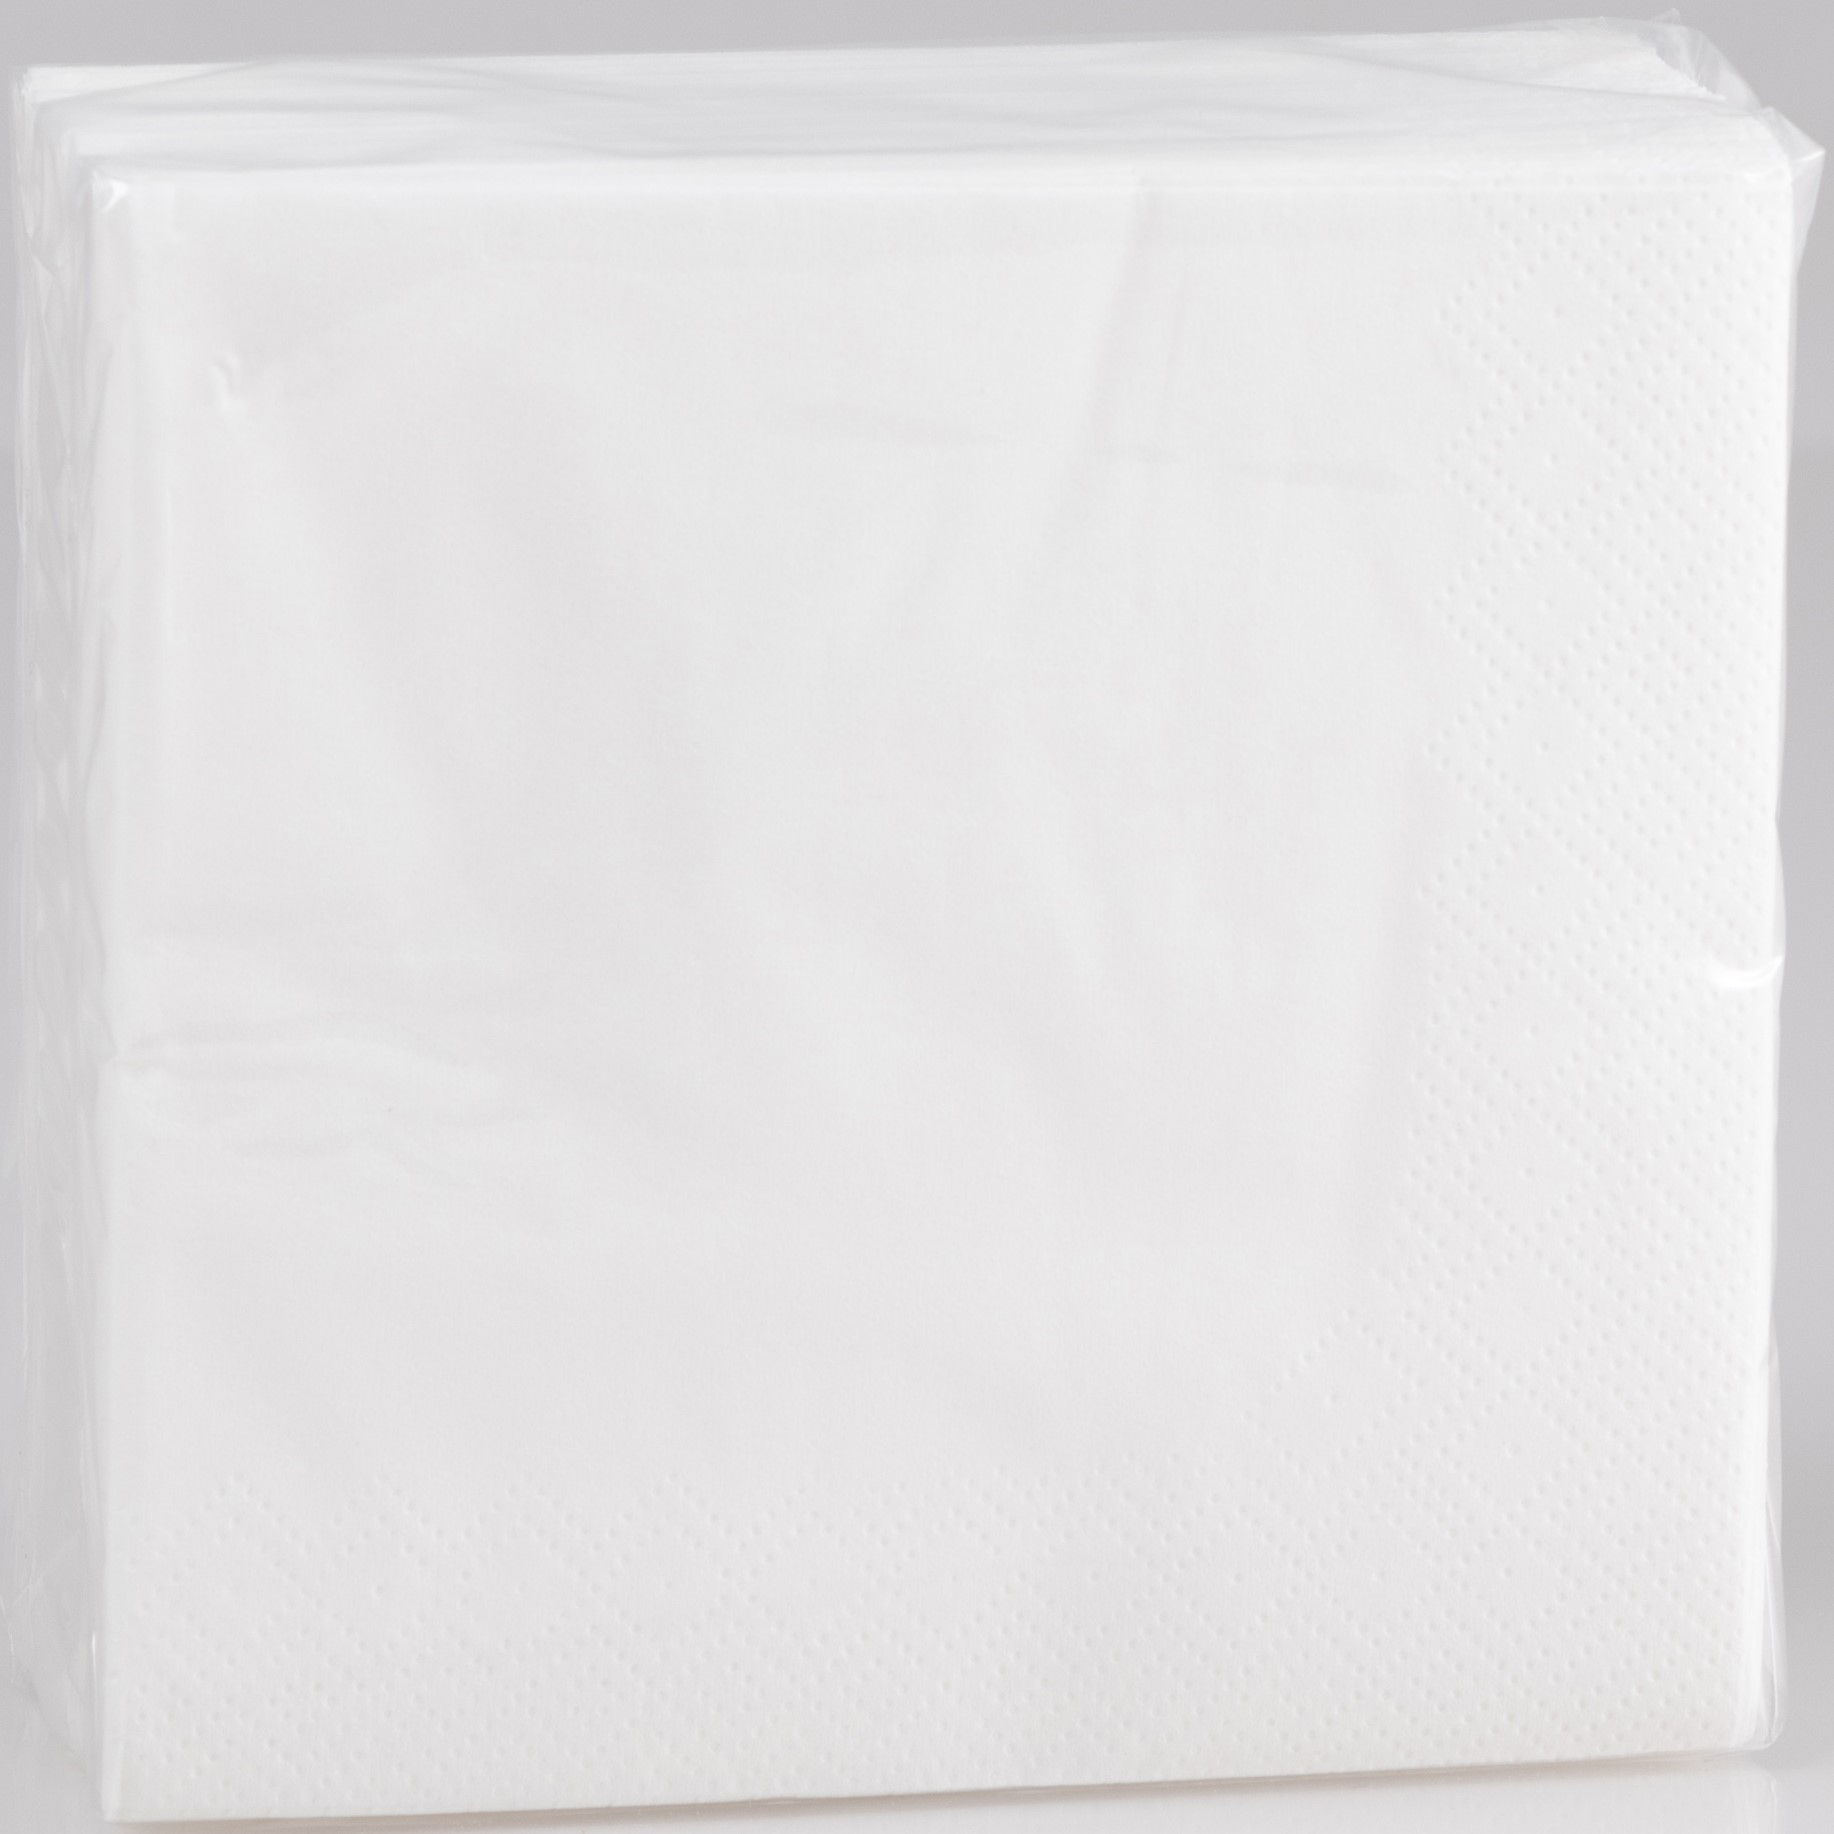 ELCO Serviettes tissue 24x24cm 23400050-001 3 plis, blanc 50pcs.